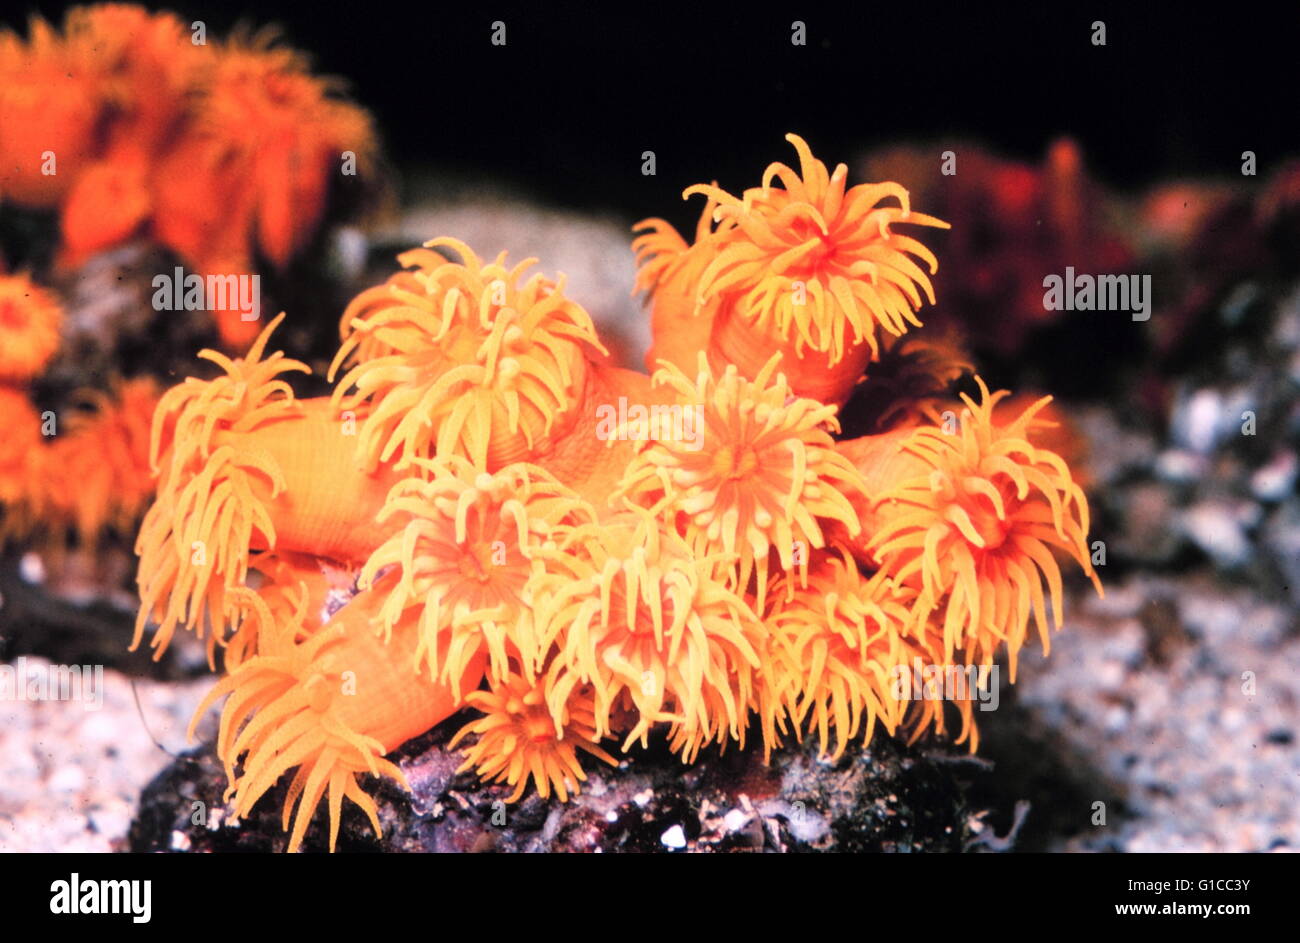 Kolonie der ahermatypique Korallen, Tubastrea sp. Stockfoto